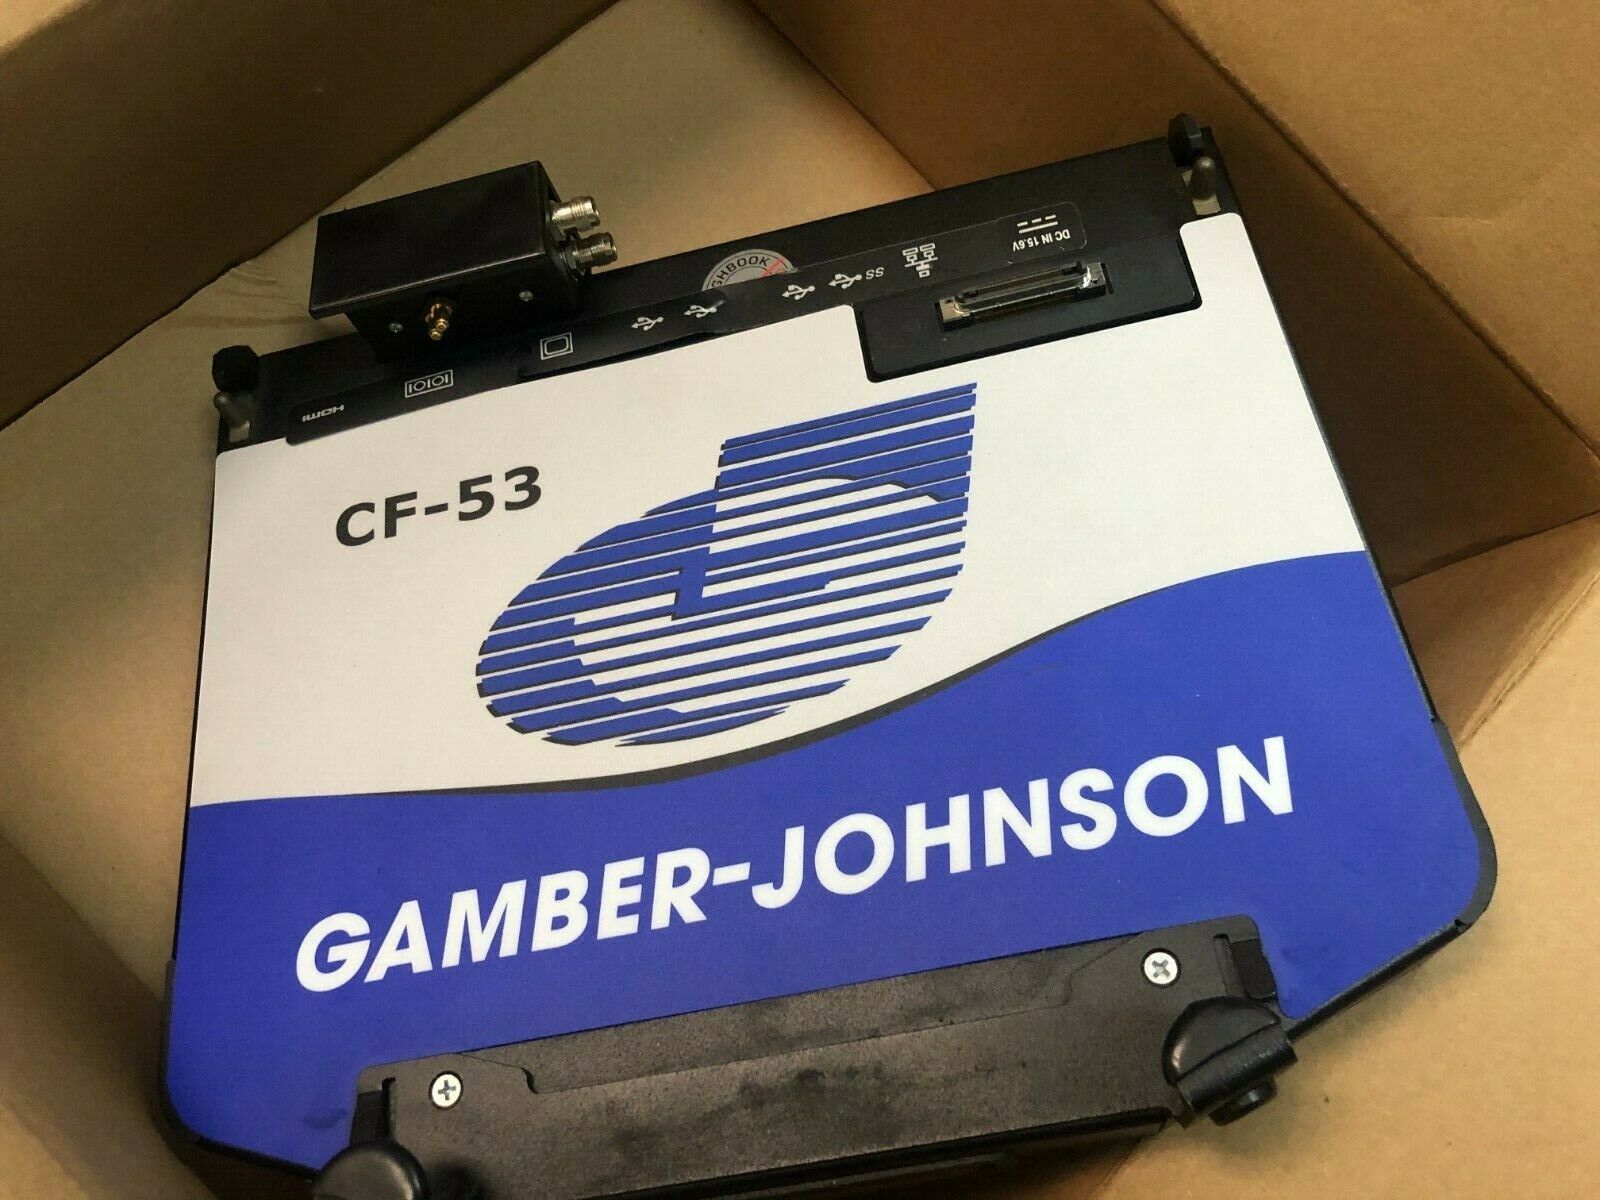 Gamber-Johnson Panasonic Toughbook CF-53 Docking Station Dual RF 7160-0393-02